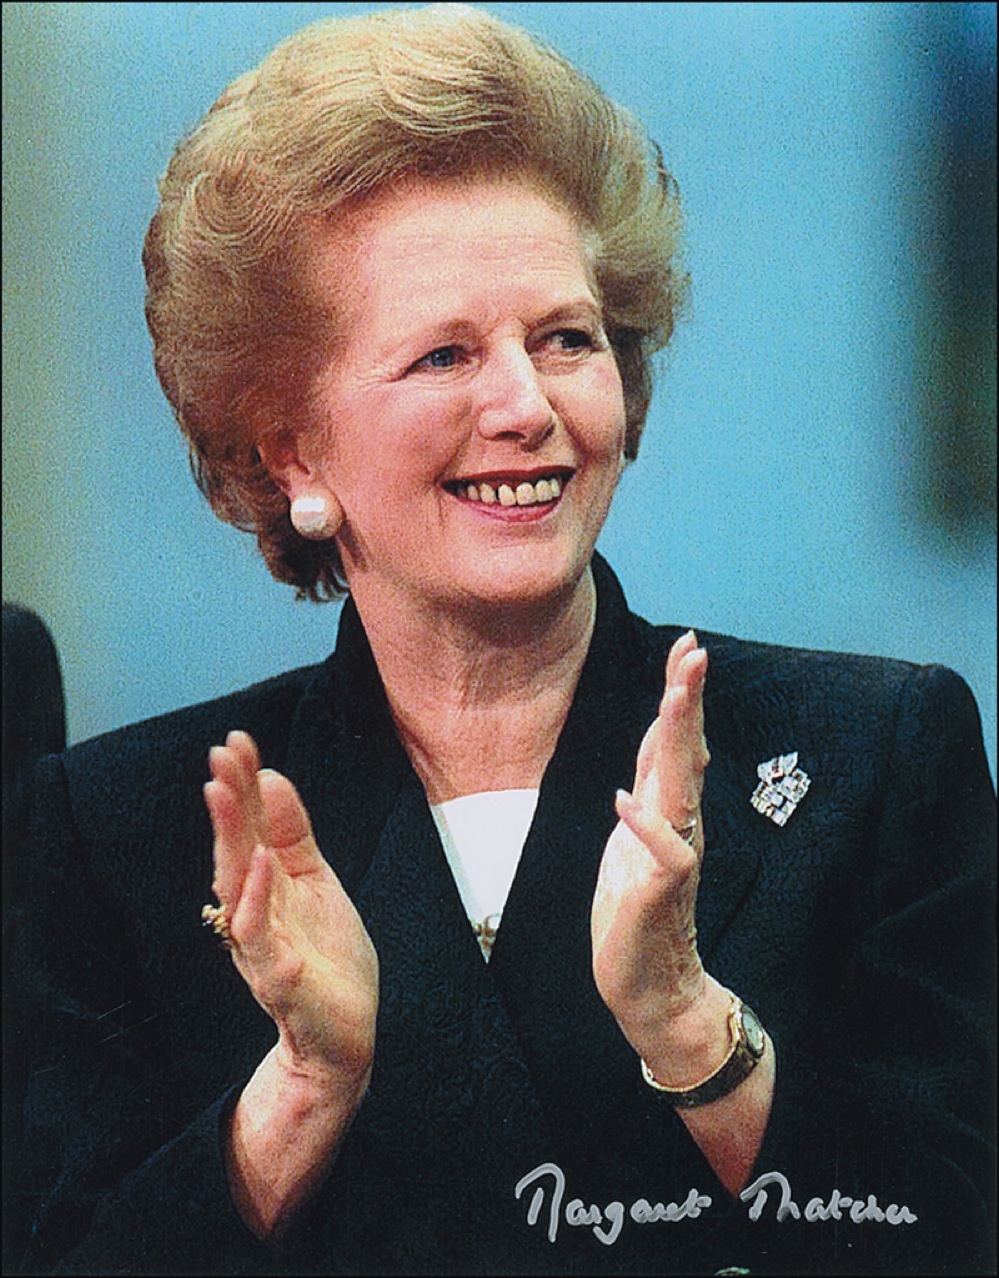 Lot #293 Margaret Thatcher